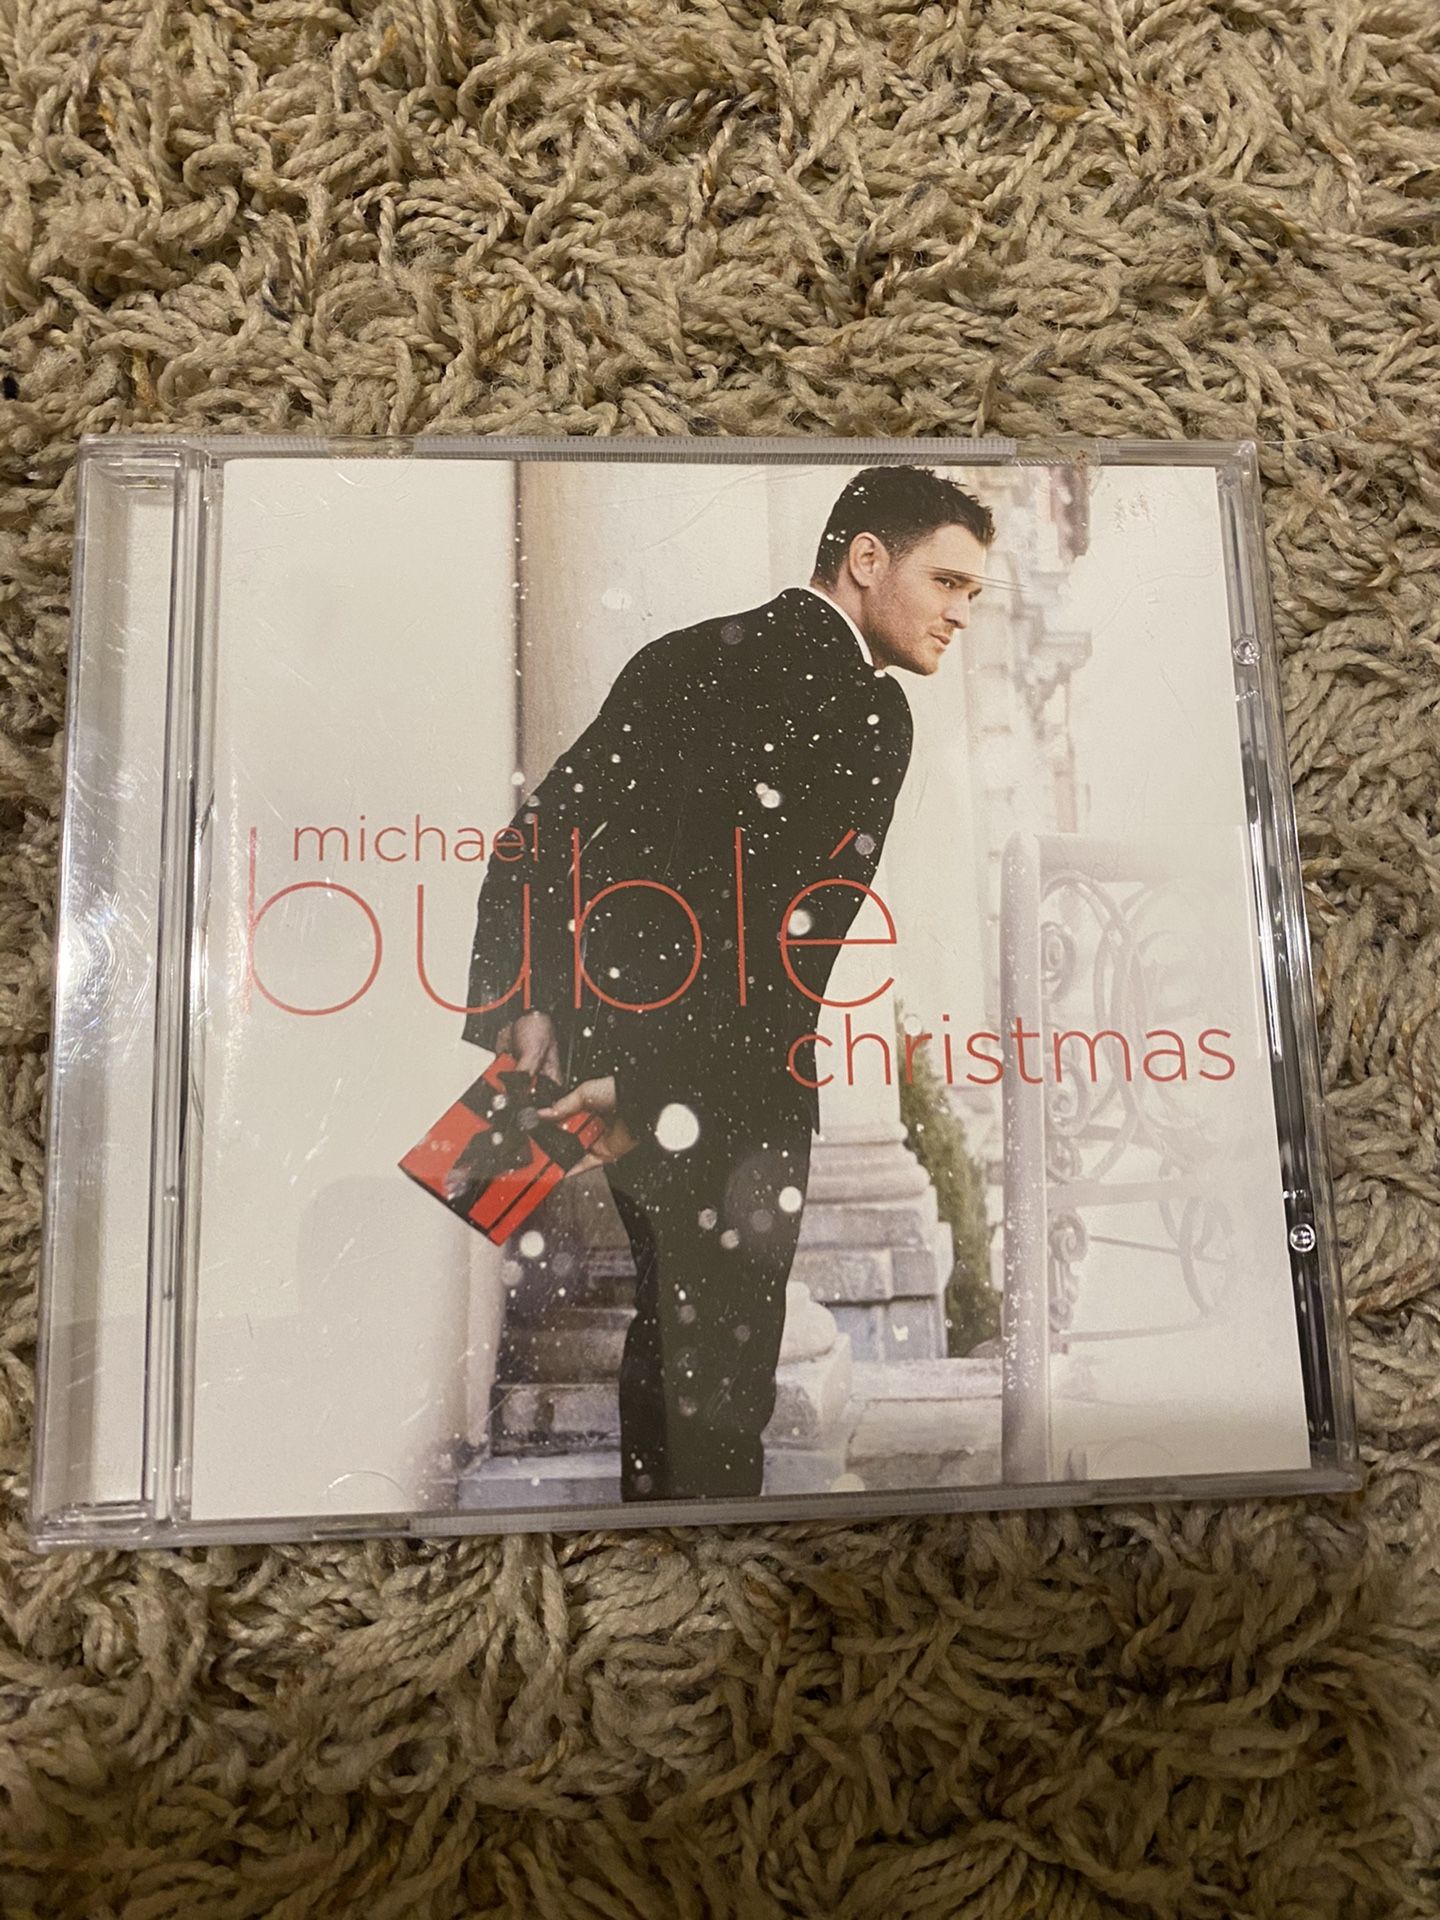 Michael bublé Christmas CD